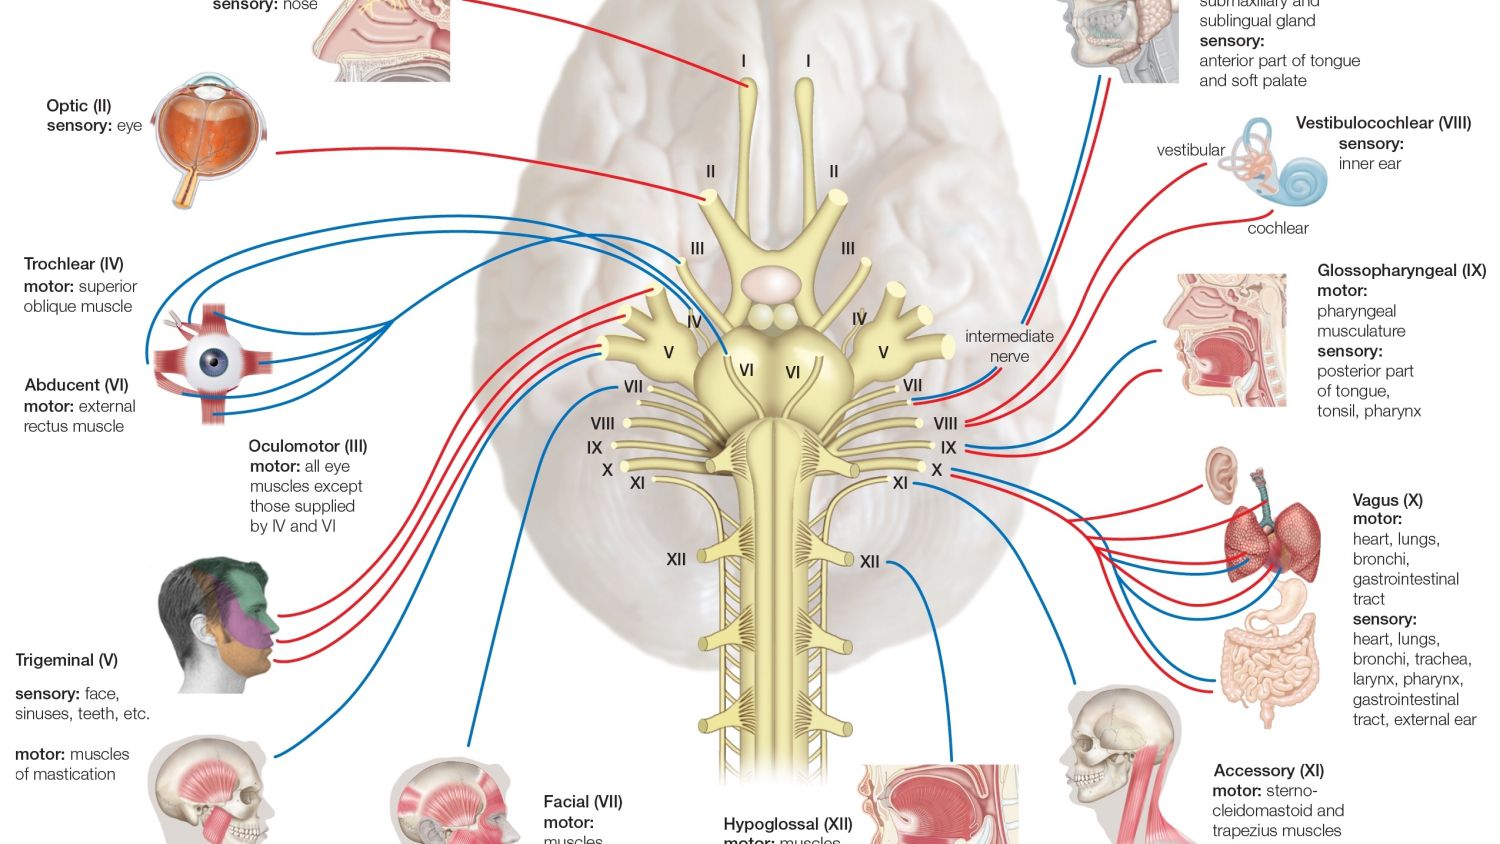 cranial-nerves-56a09b4a3df78cafdaa32f16.jpg